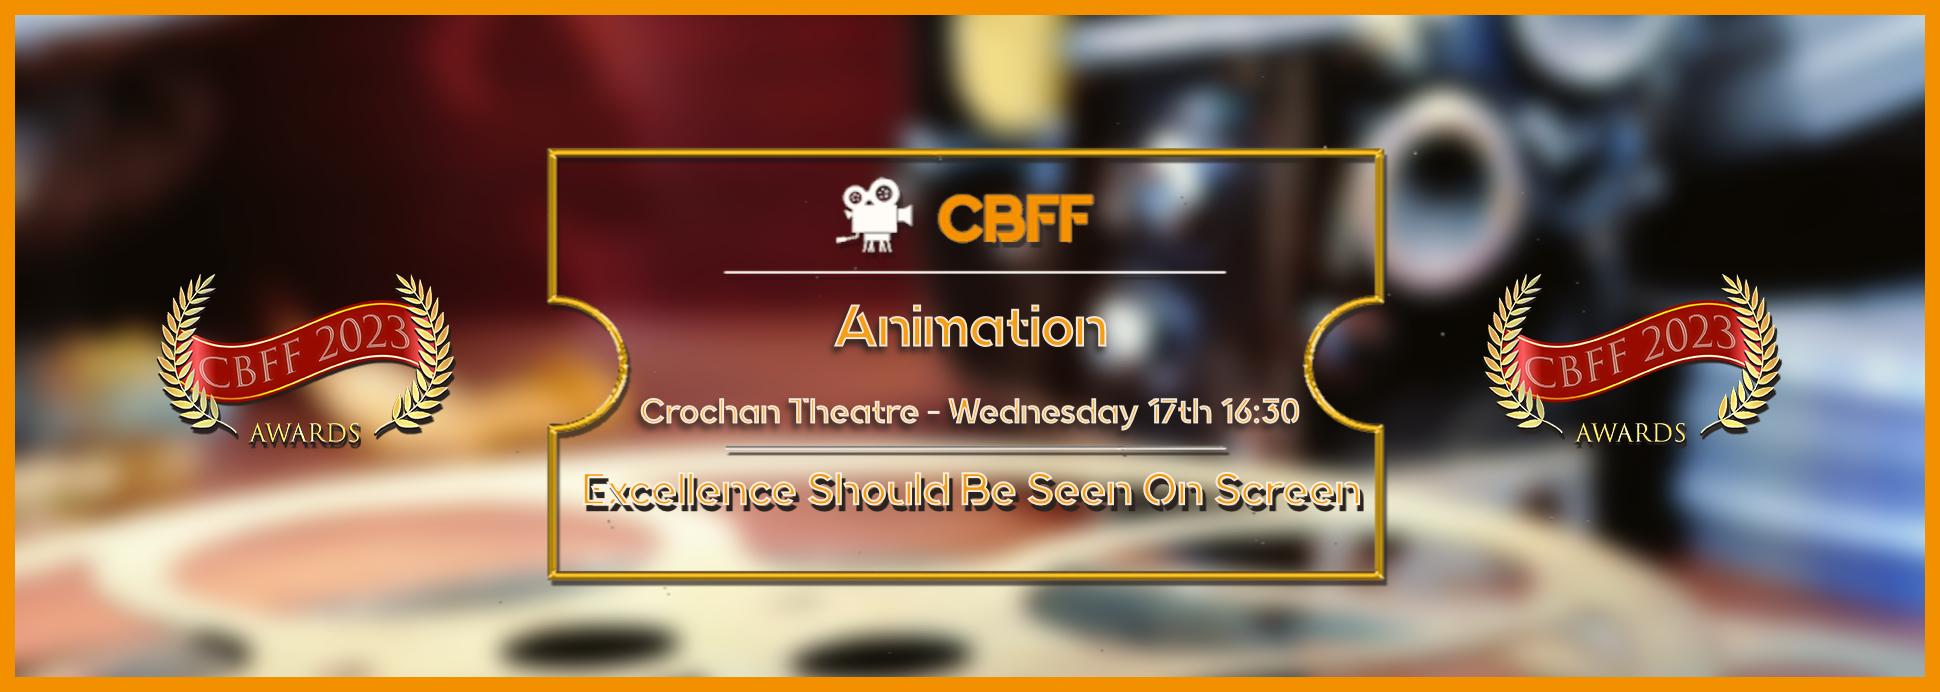 Crochan Theatre - Animation 17th 16:30